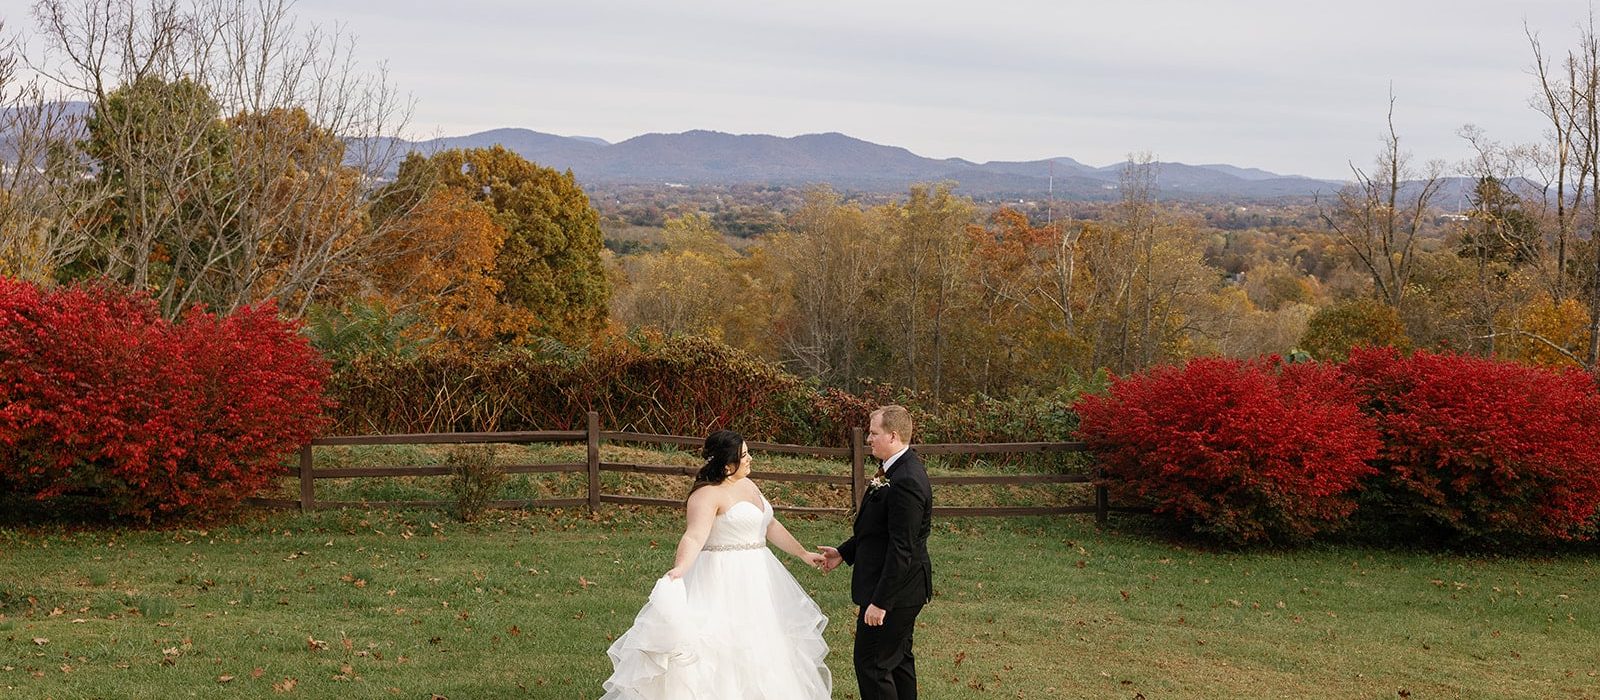 Kathy Beaver Photography, Asheville Wedding Photographer, Crest Center Wedding, Fall Wedding, Mountain View Wedding